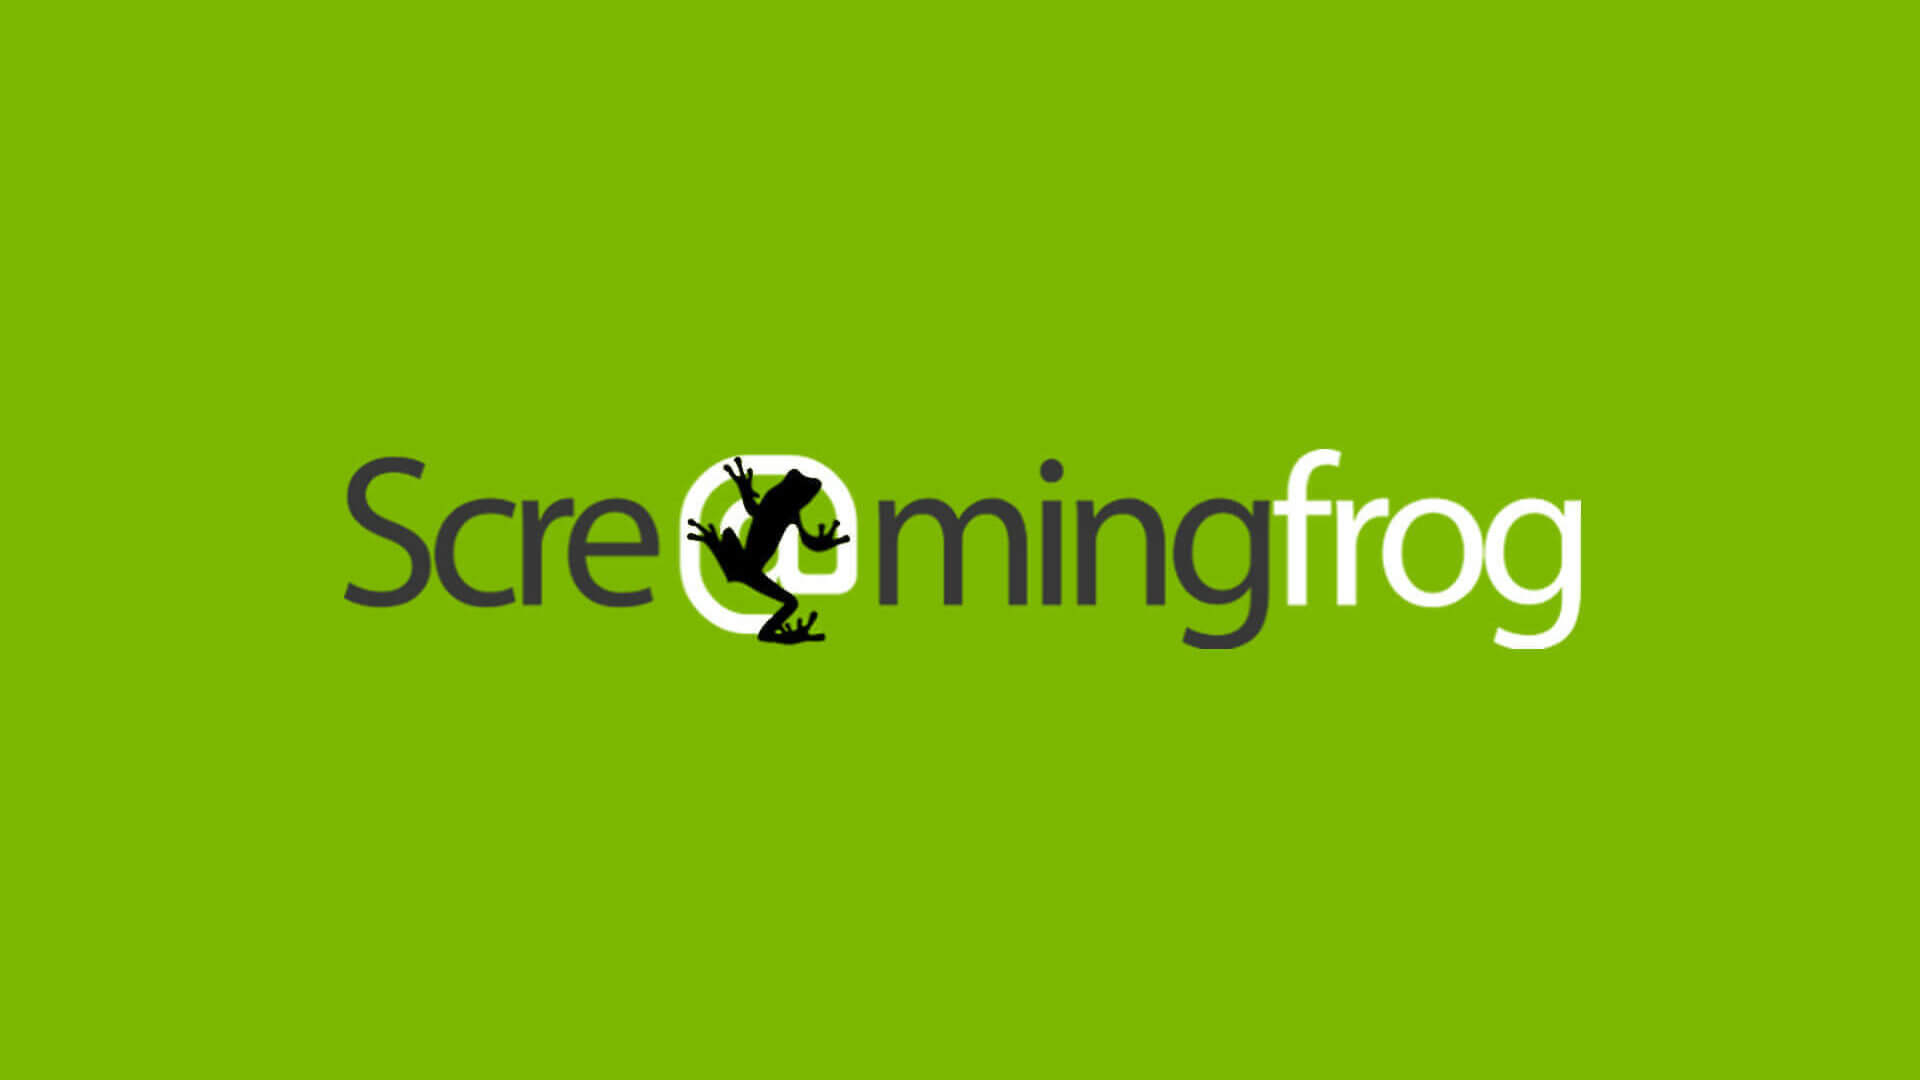 screaming-frog-logo.jpg